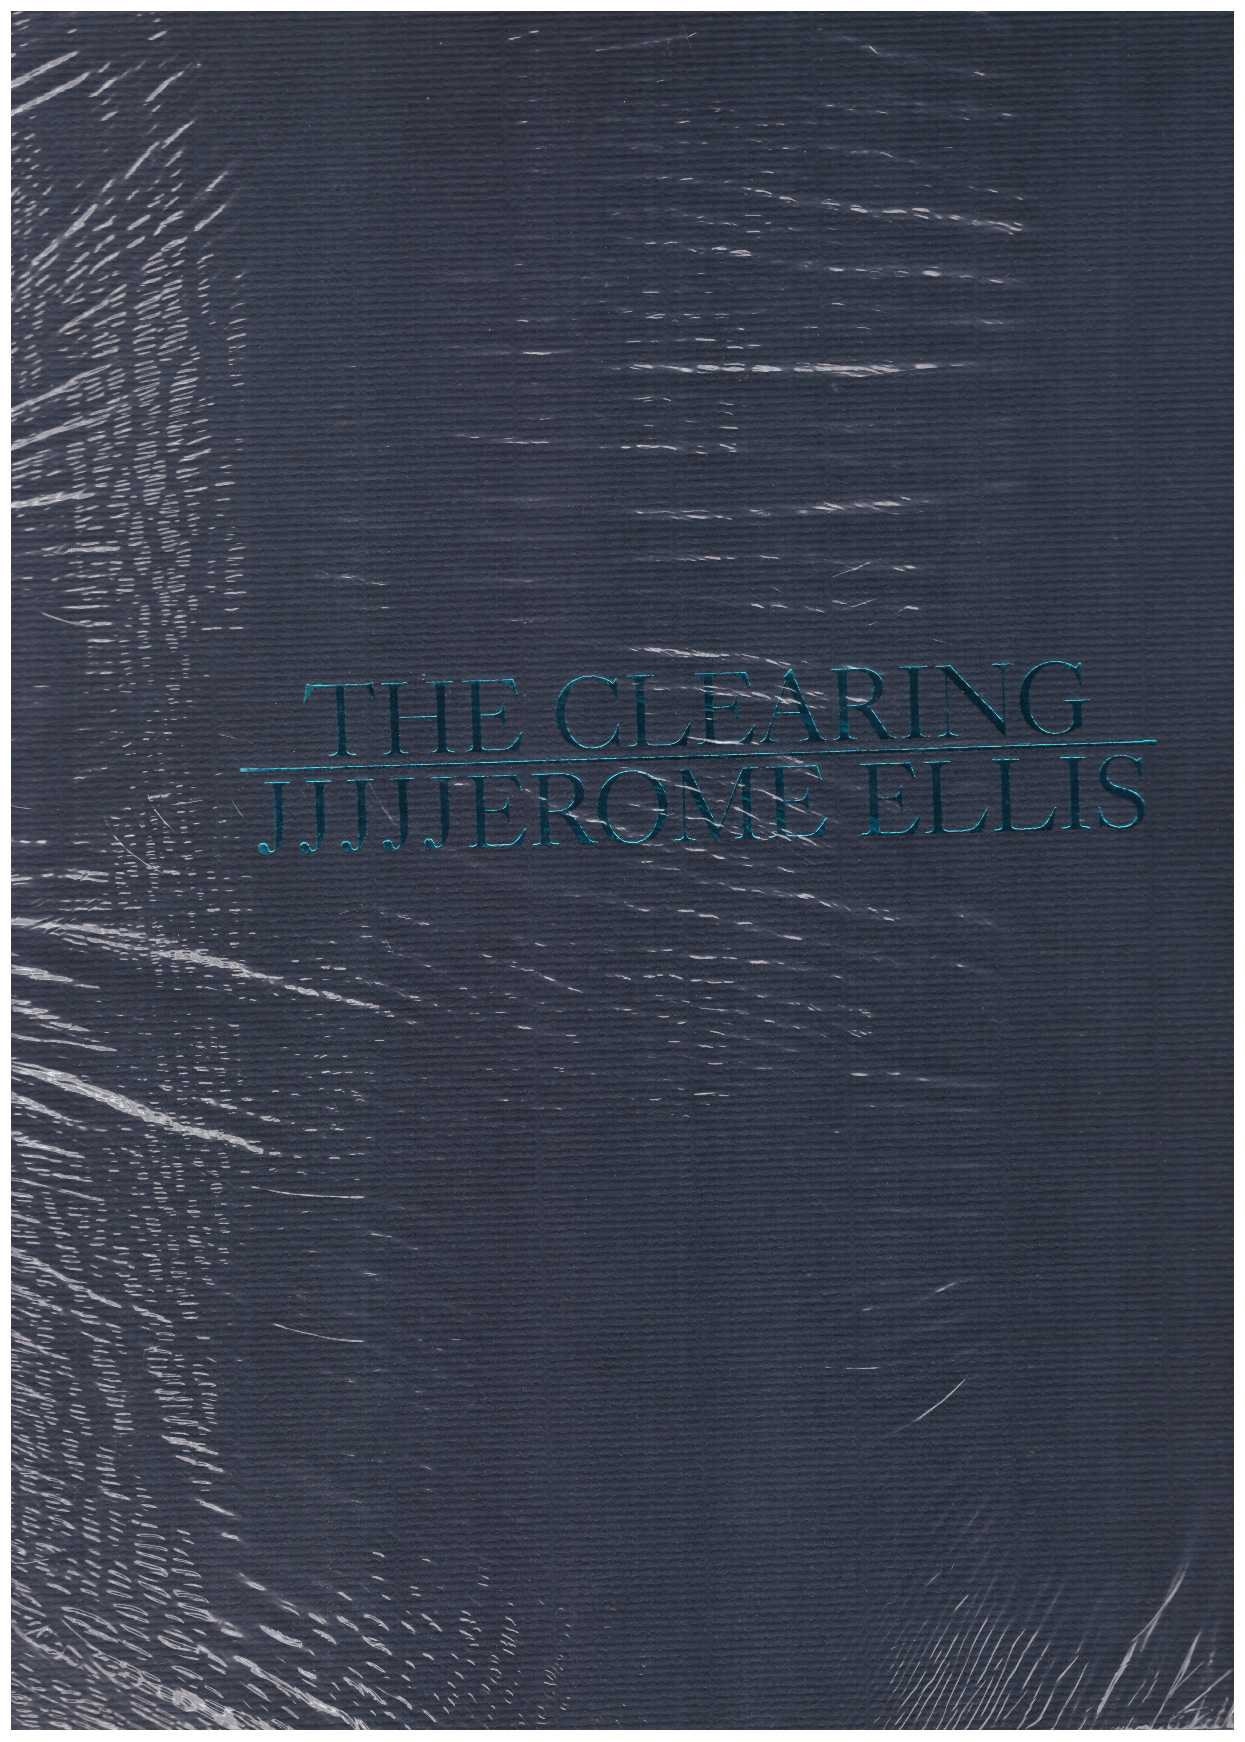 ELLIS, JJJJJerome - The Clearing (new edition)